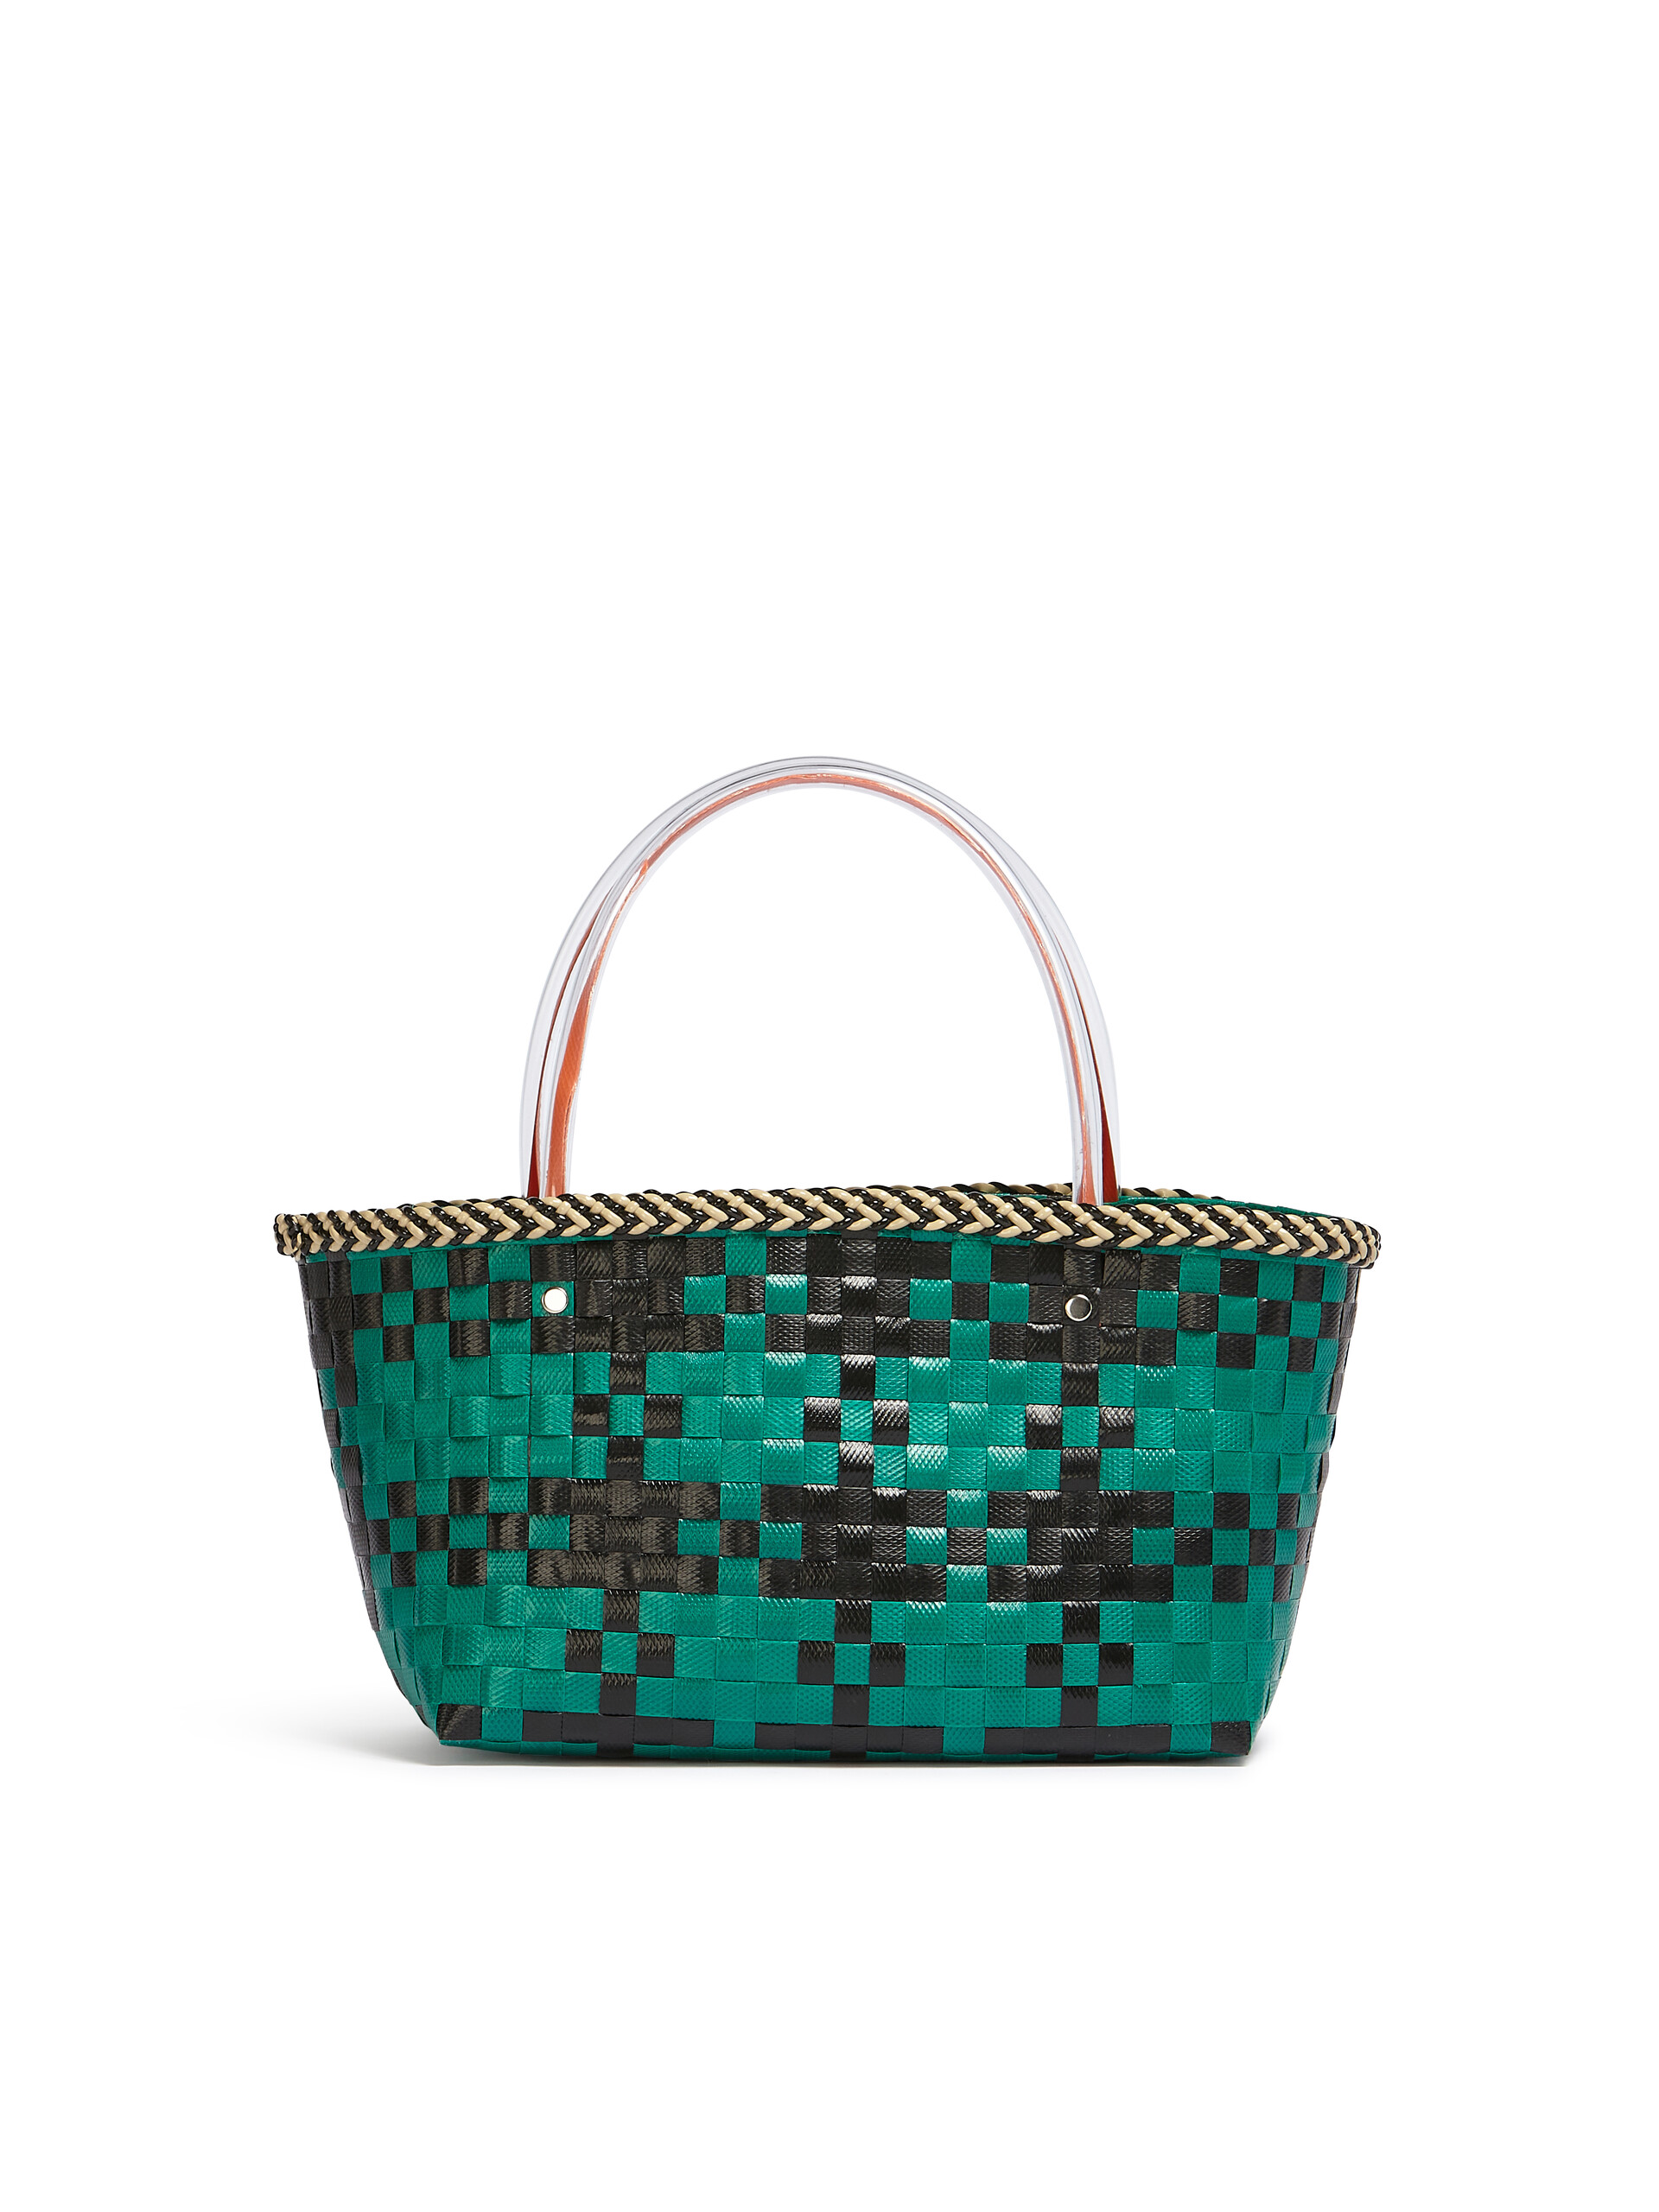 MARNI MARKET CHECK BAG in black and green tartan woven material - Shopping Bags - Image 3